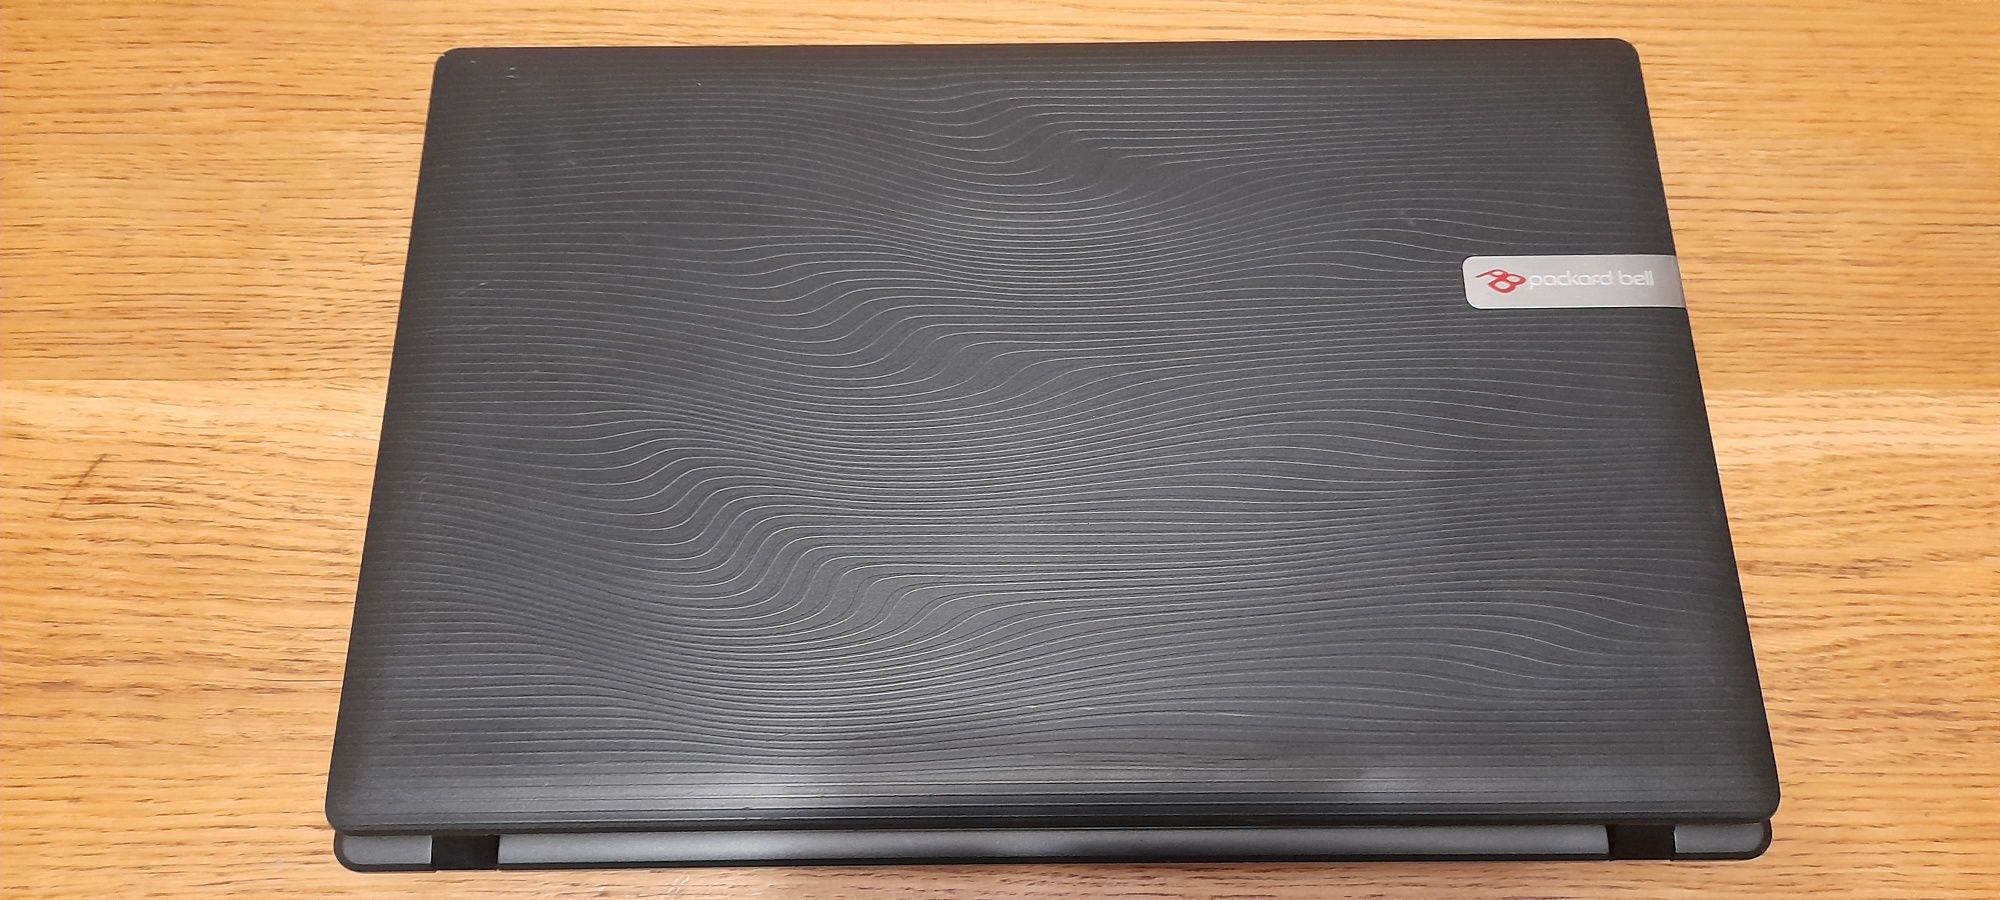 Laptop Packard Bell PEW96, Windows 7